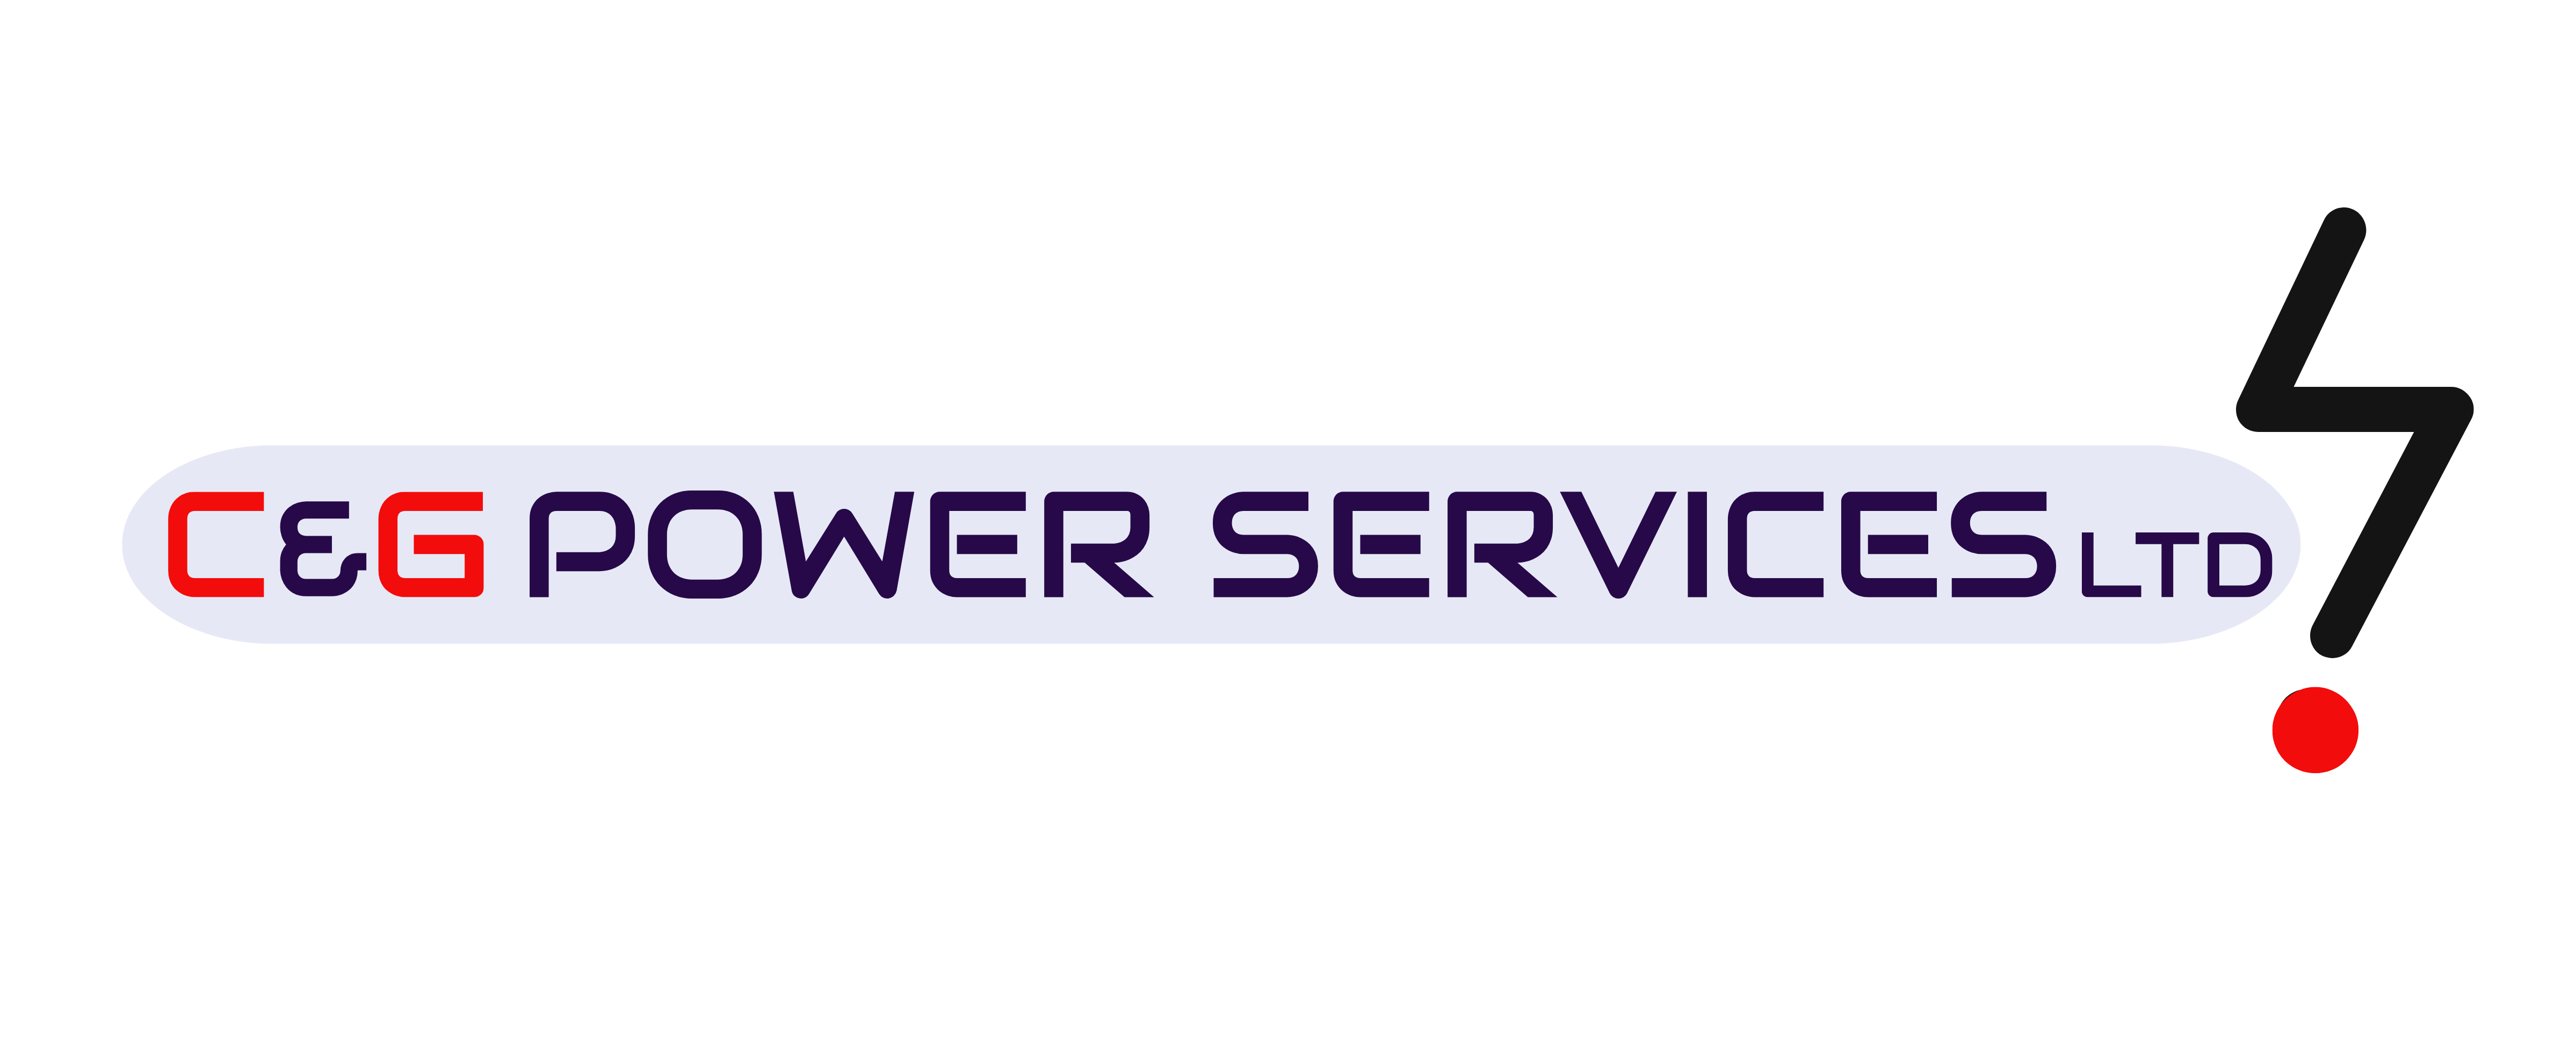 logo for C&G Power Services Ltd